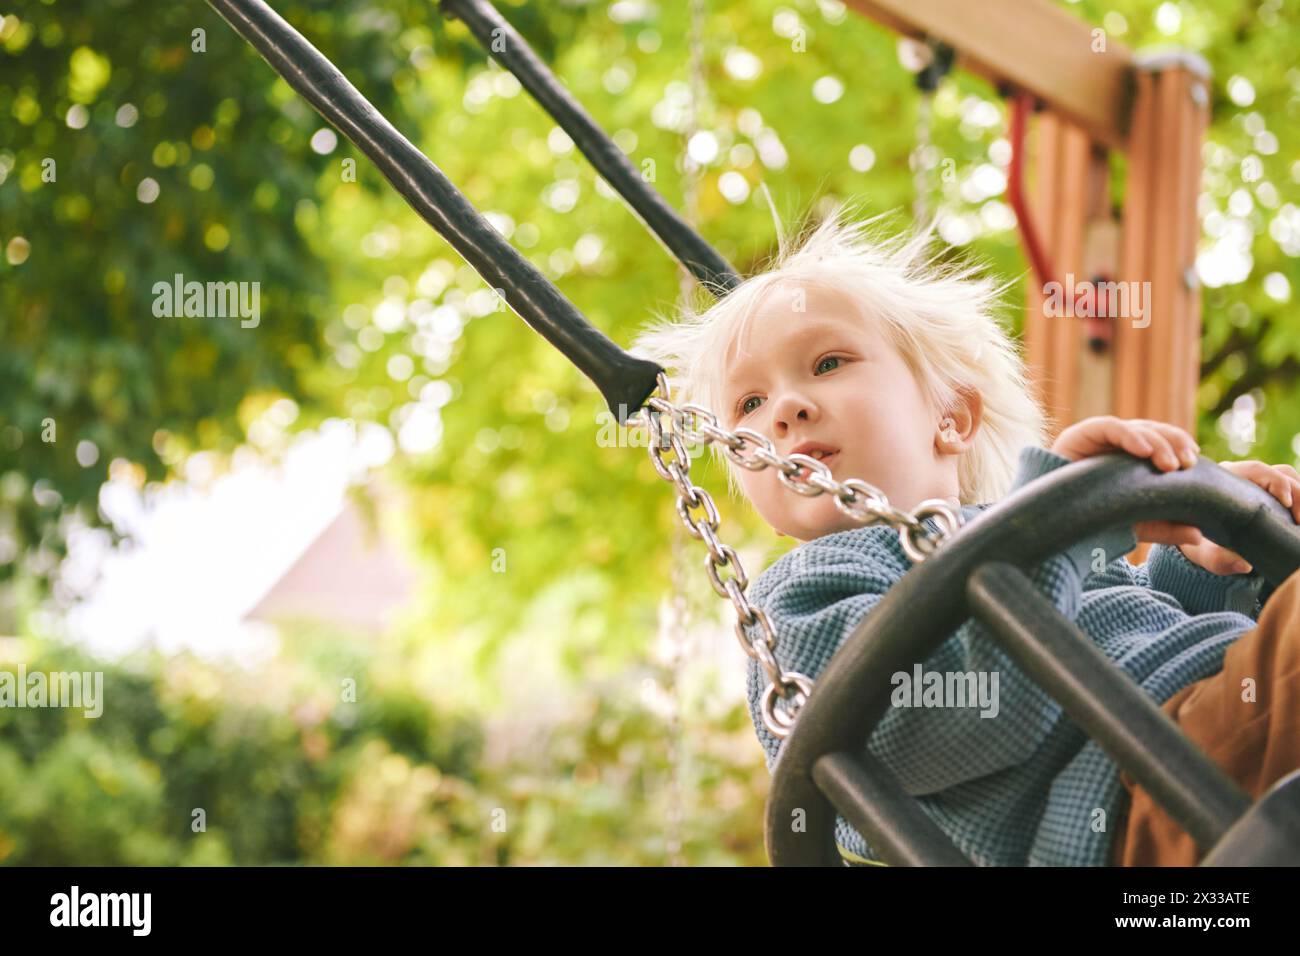 Outdoor portrait of adorable little boy having fun on swing on playground Stock Photo